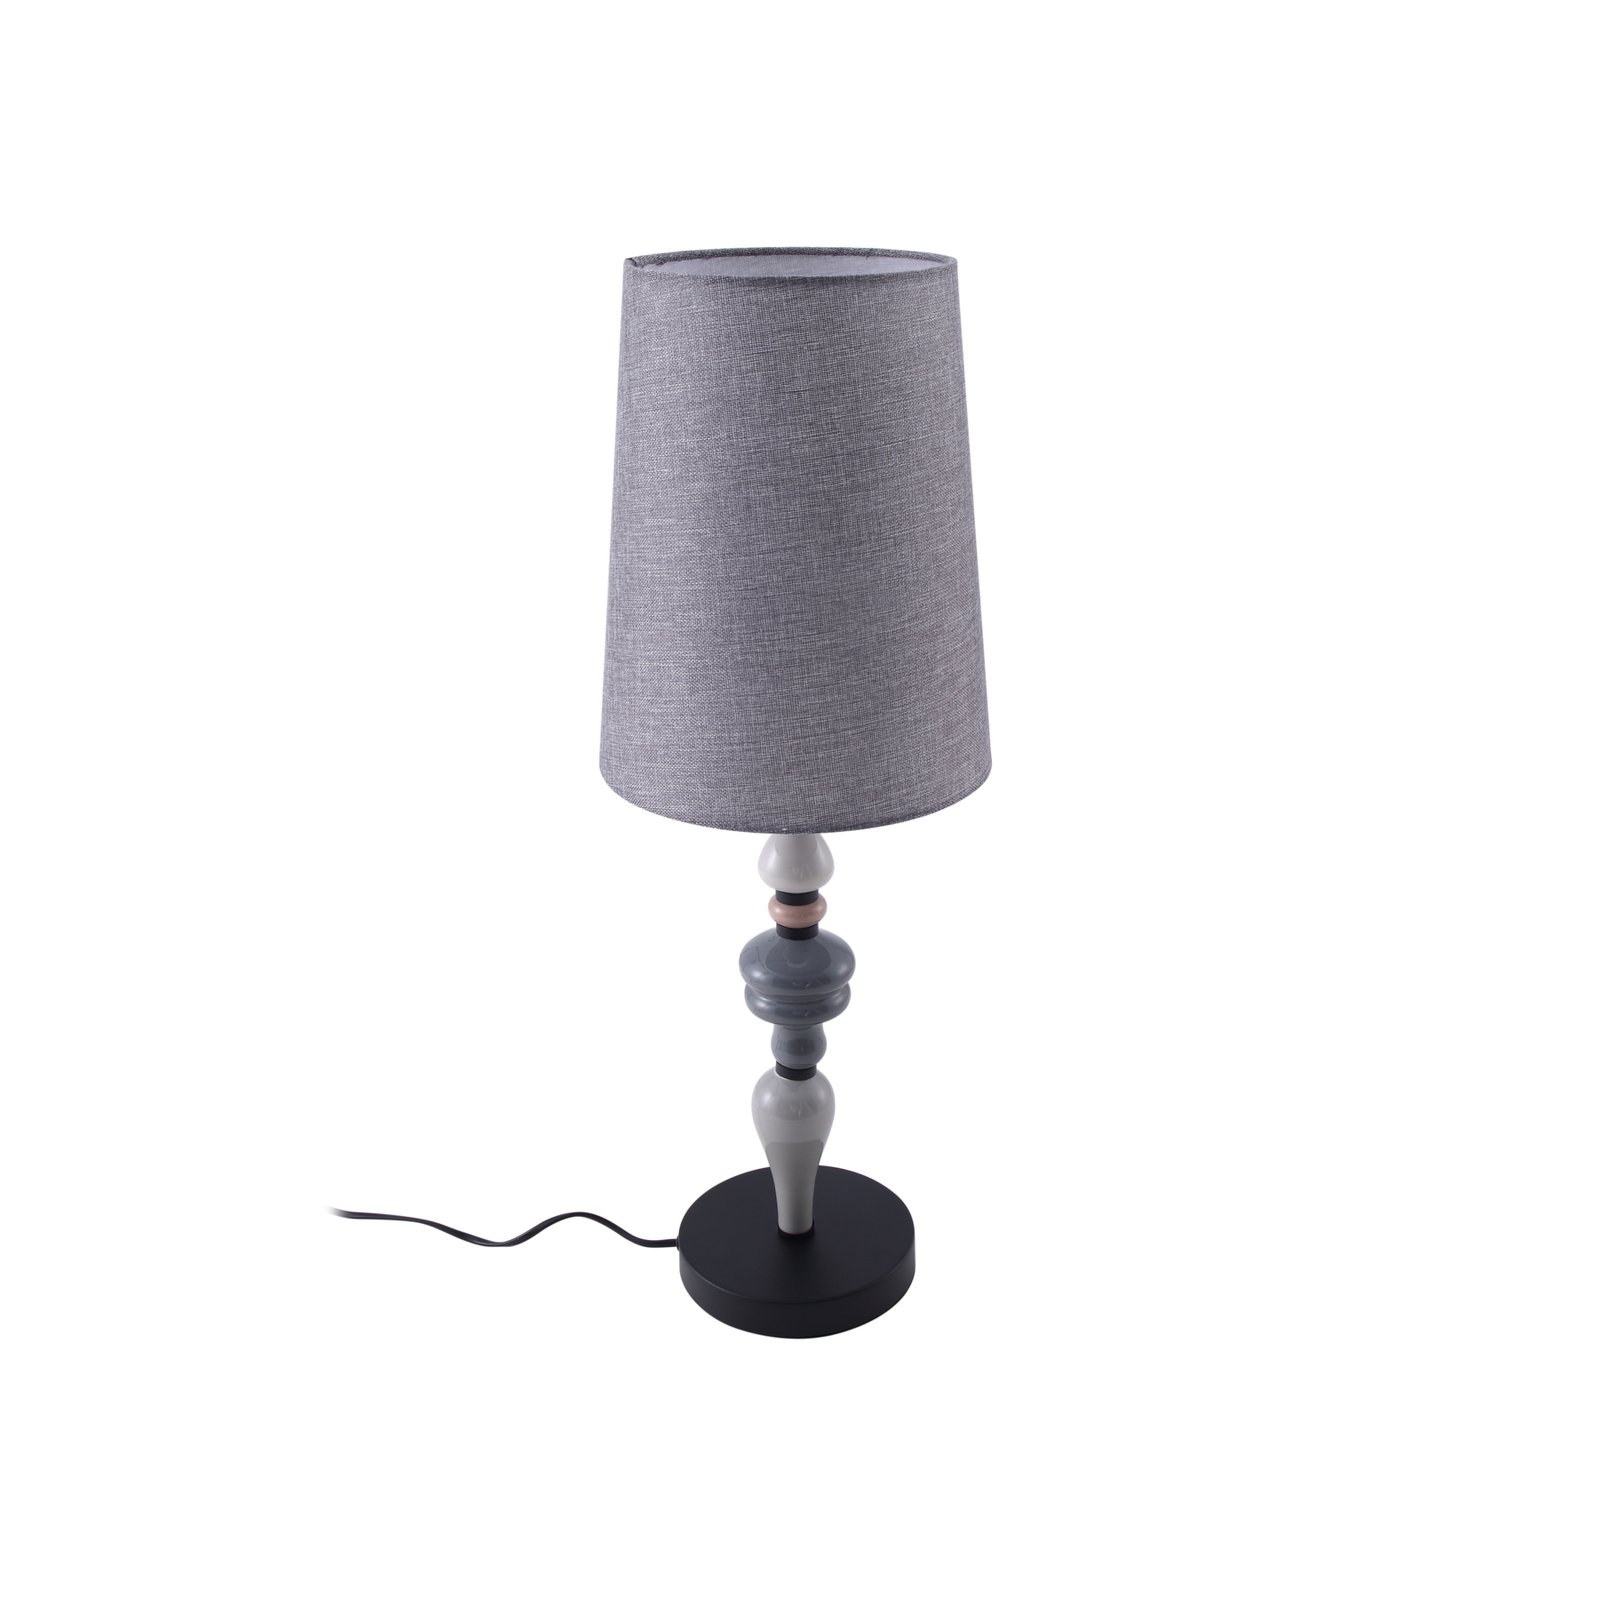 Lindby tafellamp Haldorin, grijs/zwart, textiel, 62 cm